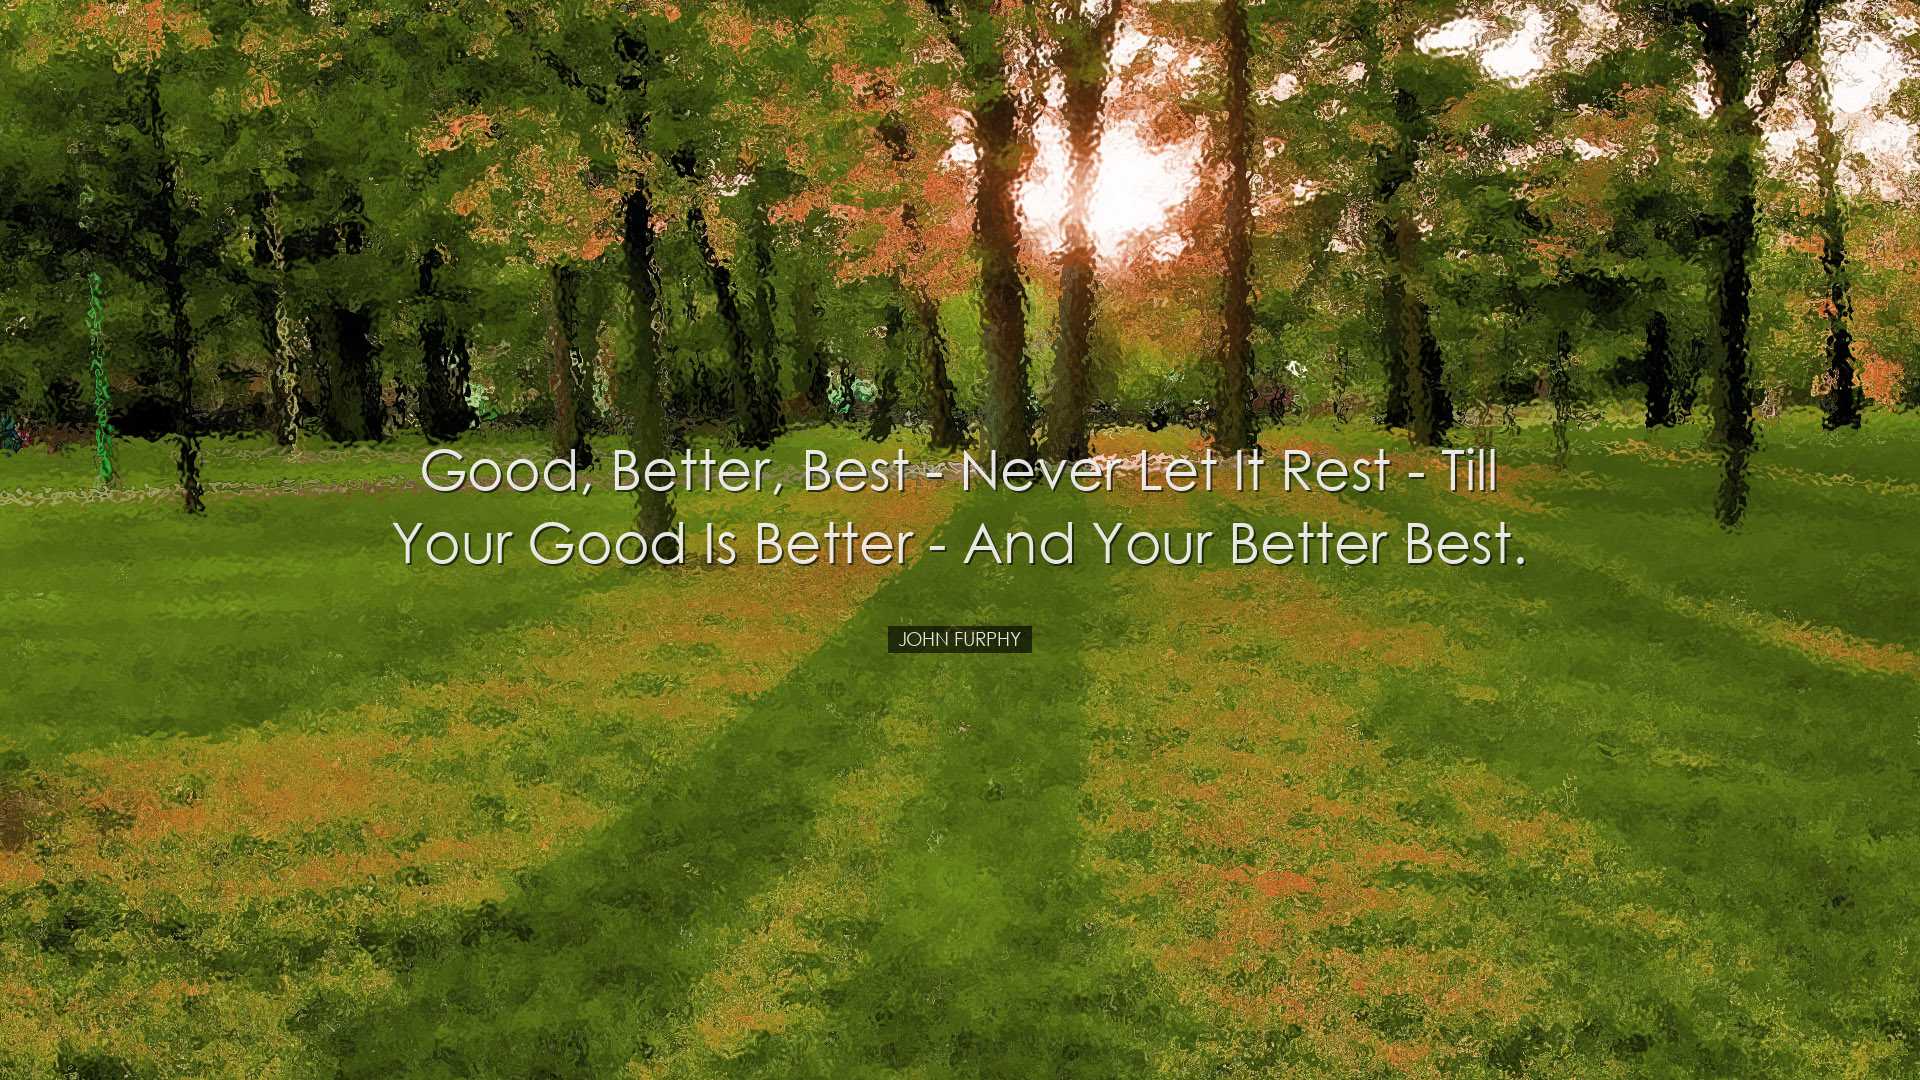 Good, better, best - never let it rest - till your good is better